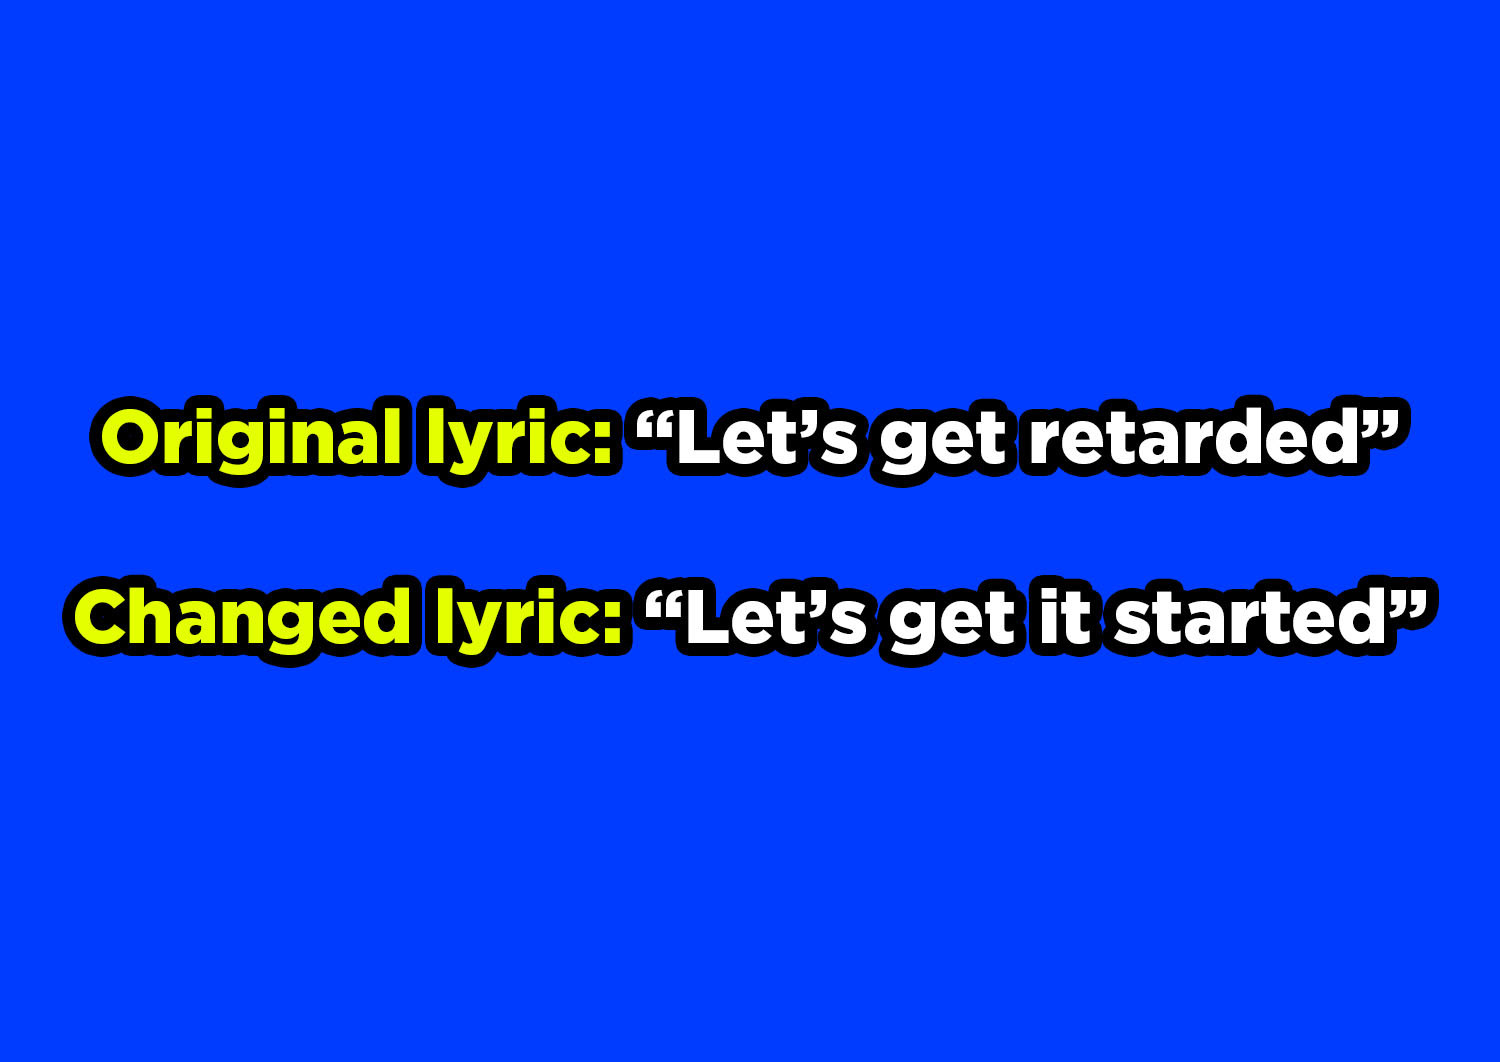 Original lyric &quot;Let&#x27;s get retarded&quot; changed to &quot;Let&#x27;s get it started&quot;